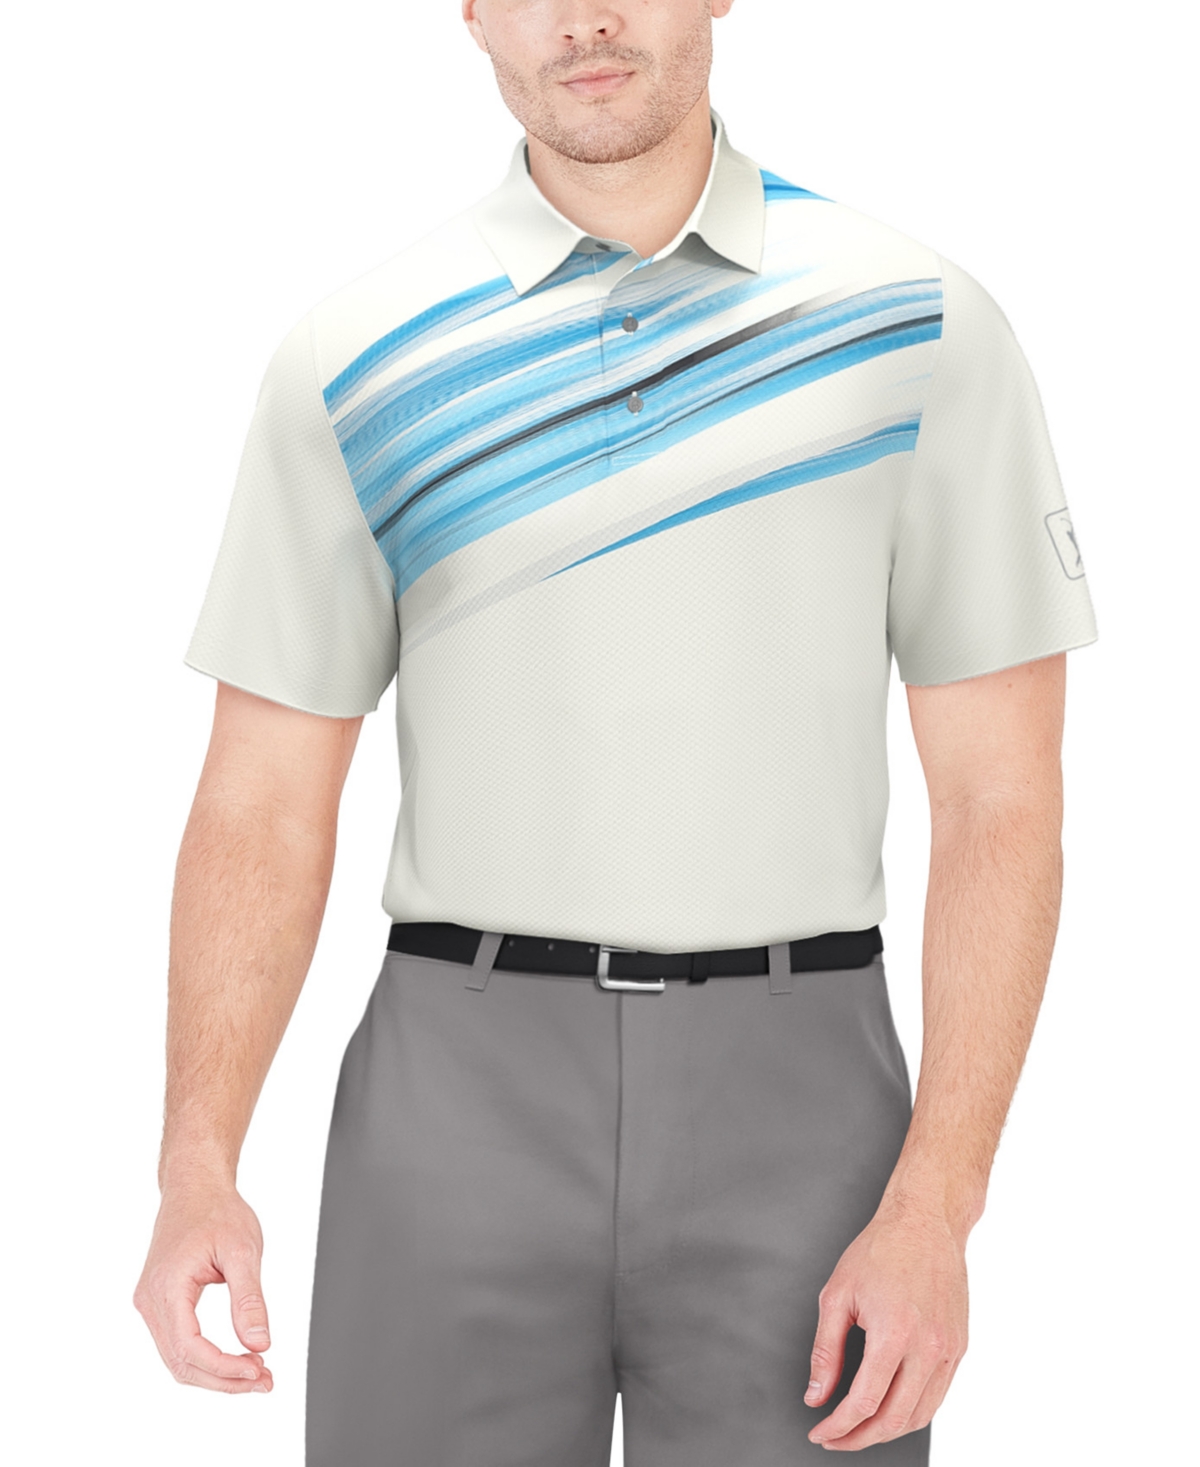 Men's Brush Stroke Textured Short Sleeve Performance Golf Polo Shirt - Bright Whi